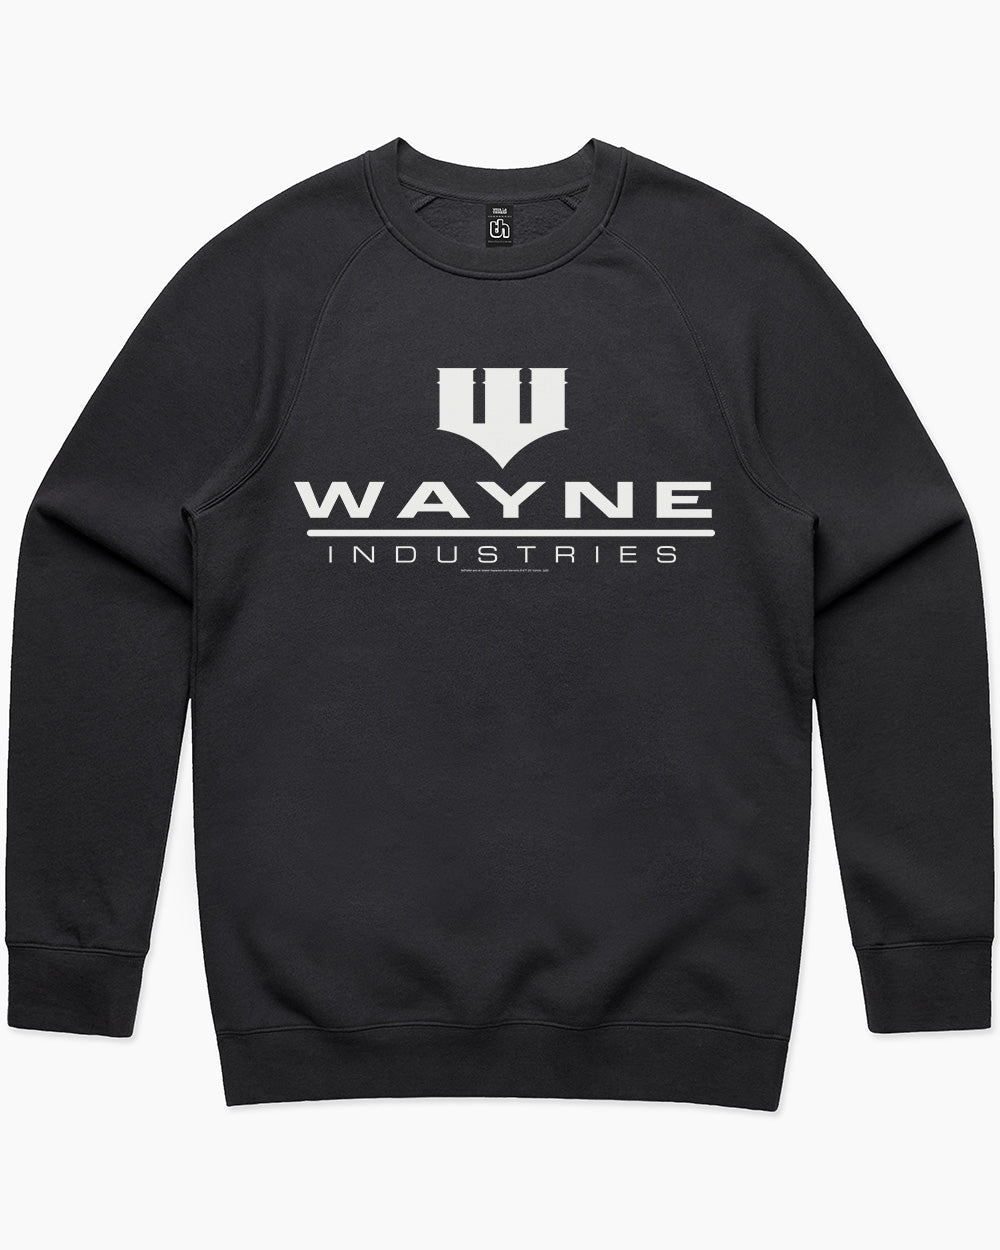 Wayne Industries Sweater Europe Online #colour_black